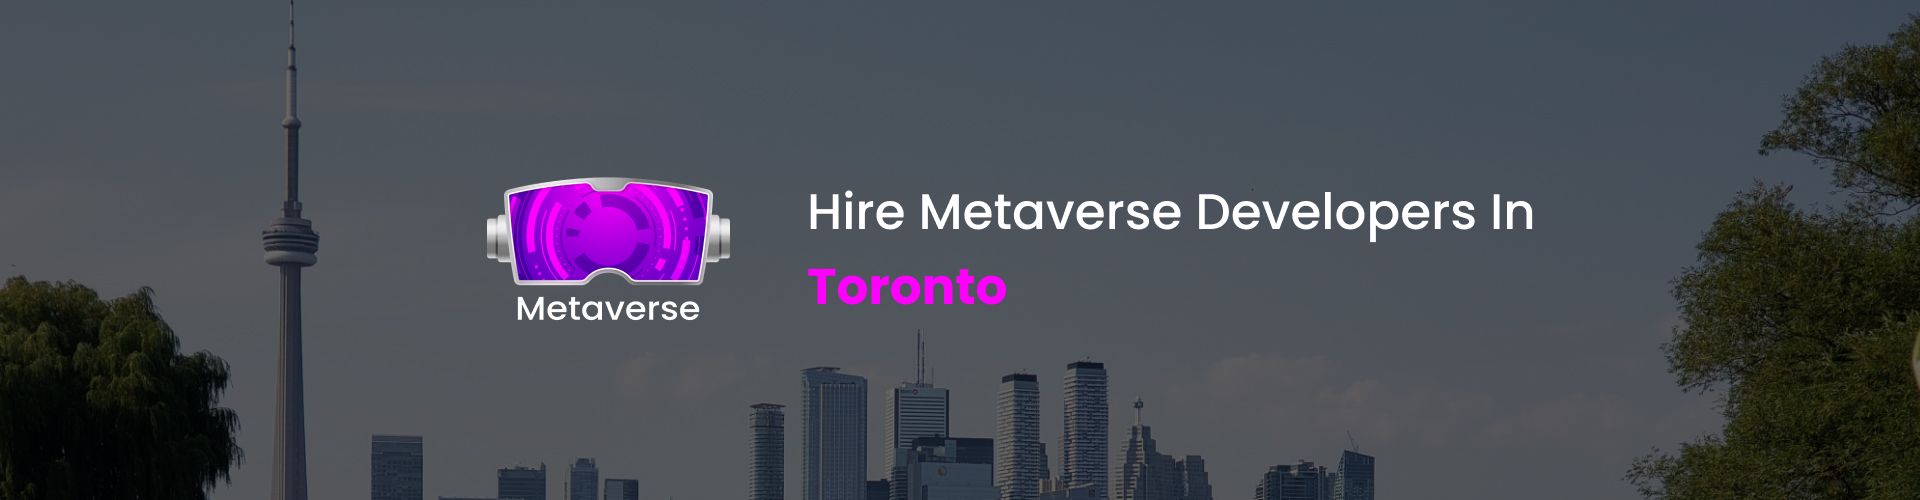 hire metaverse developers in toronto